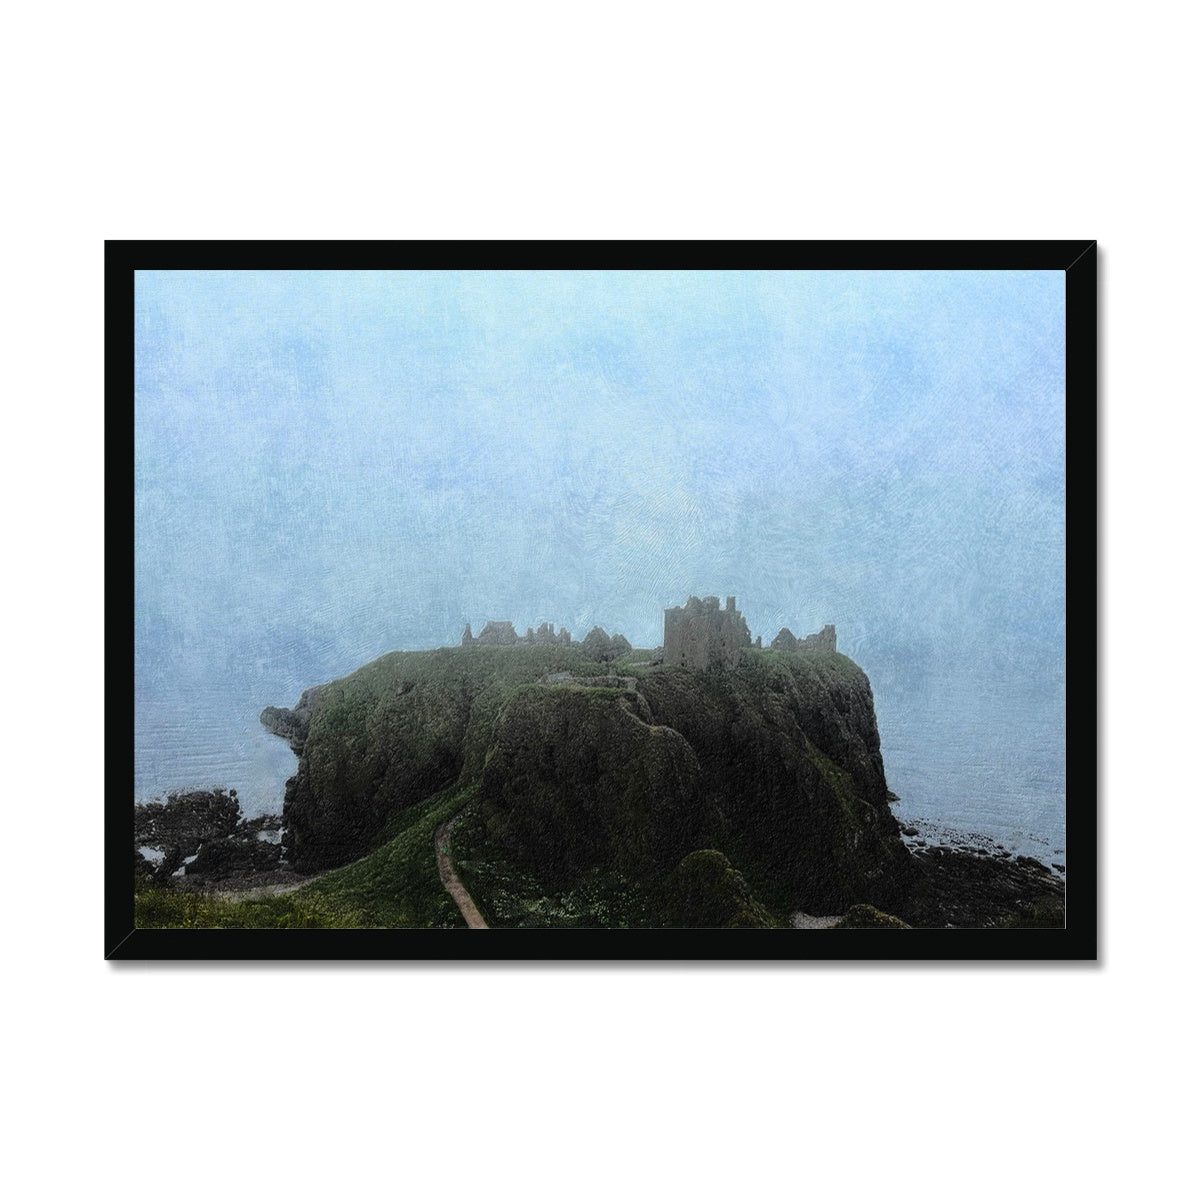 Dunnottar Castle Mist Painting | Framed Prints From Scotland-Framed Prints-Scottish Castles Art Gallery-A2 Landscape-Black Frame-Paintings, Prints, Homeware, Art Gifts From Scotland By Scottish Artist Kevin Hunter